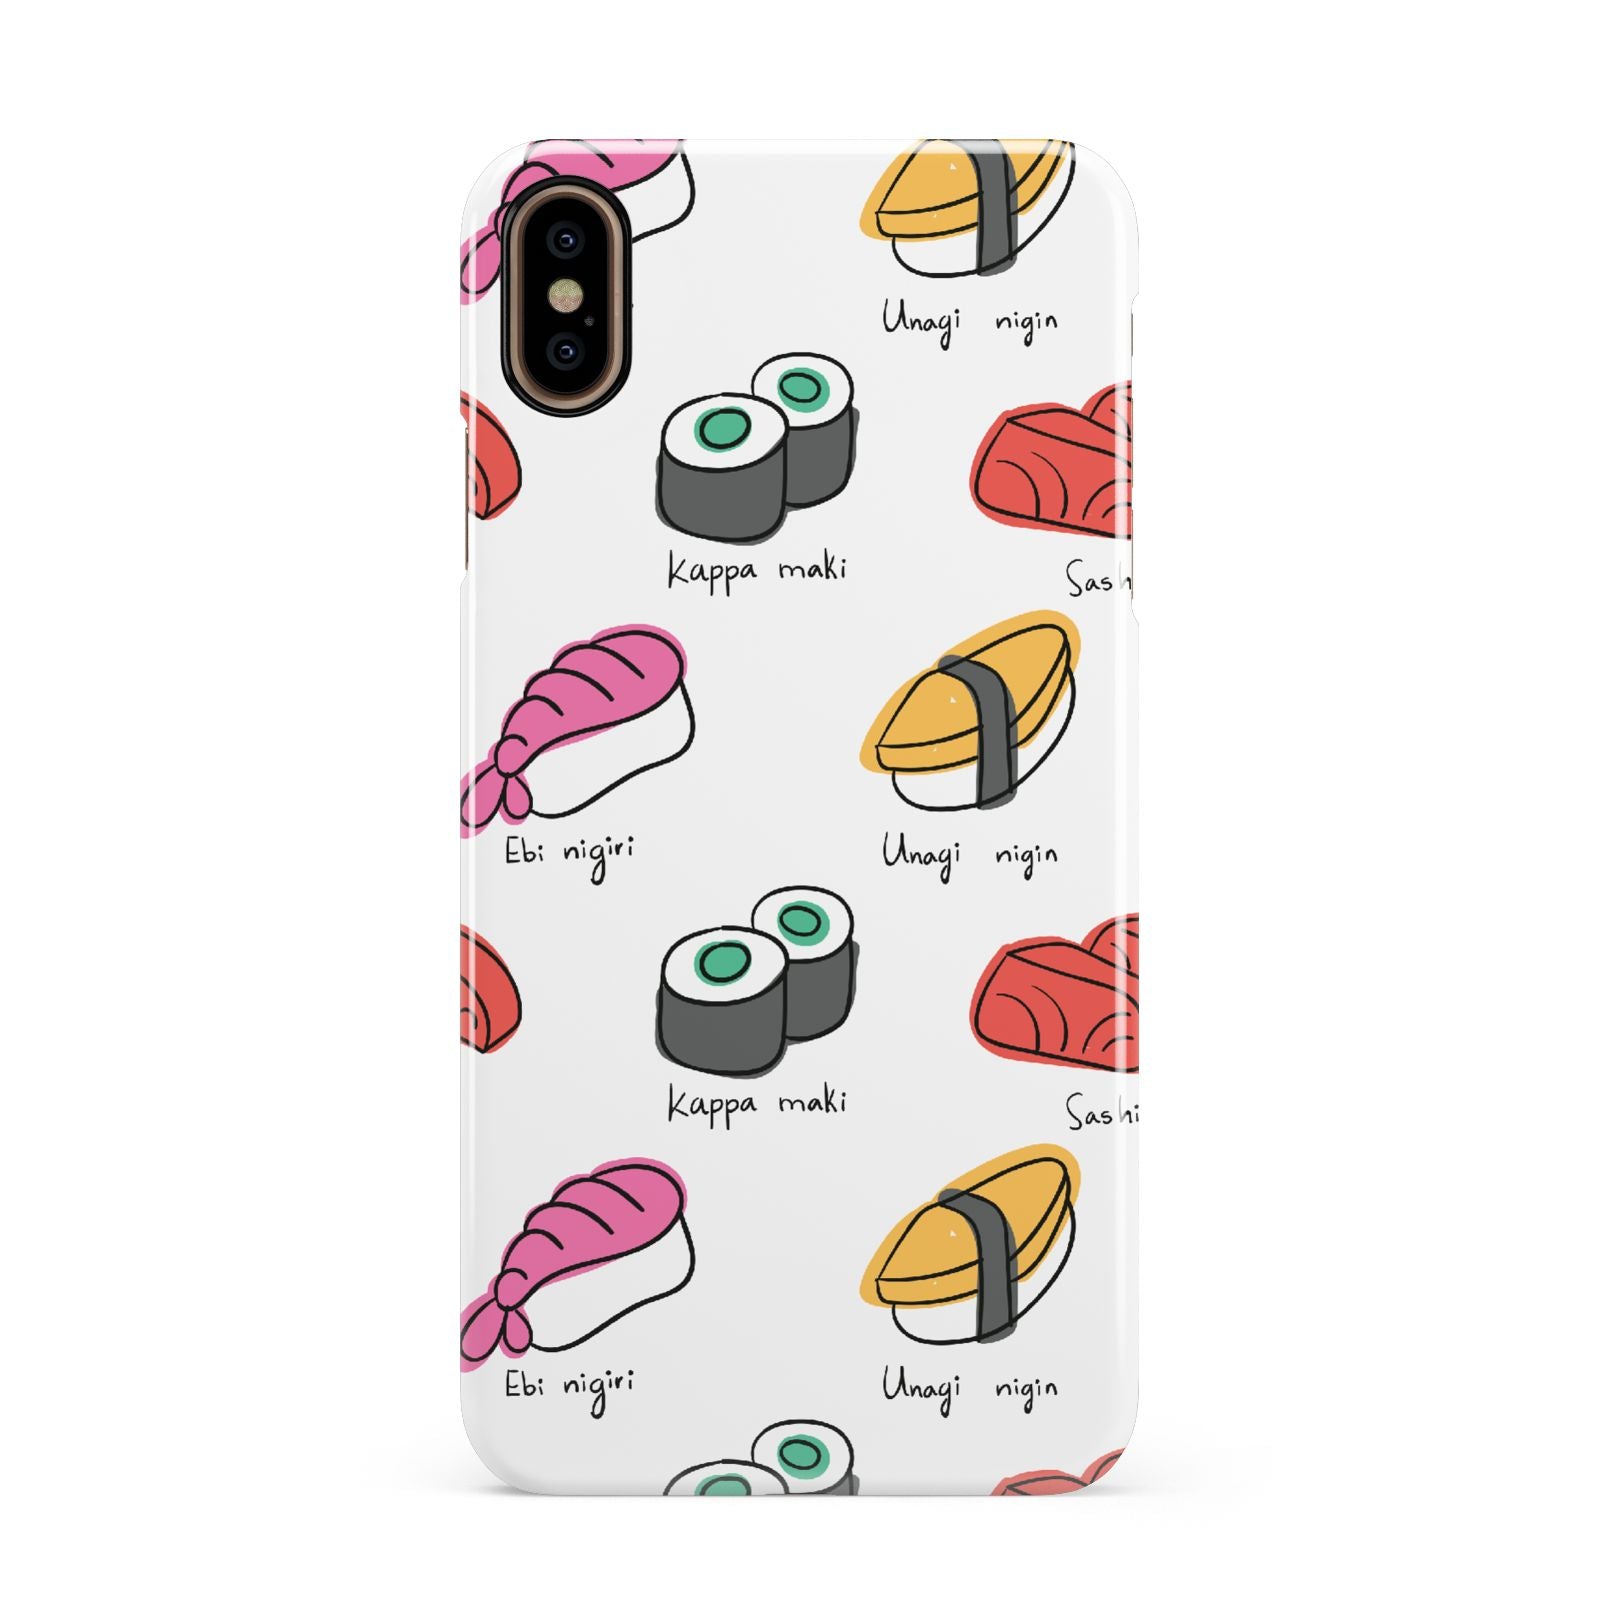 Sashimi Kappa Maki Sushi Apple iPhone Xs Max 3D Snap Case